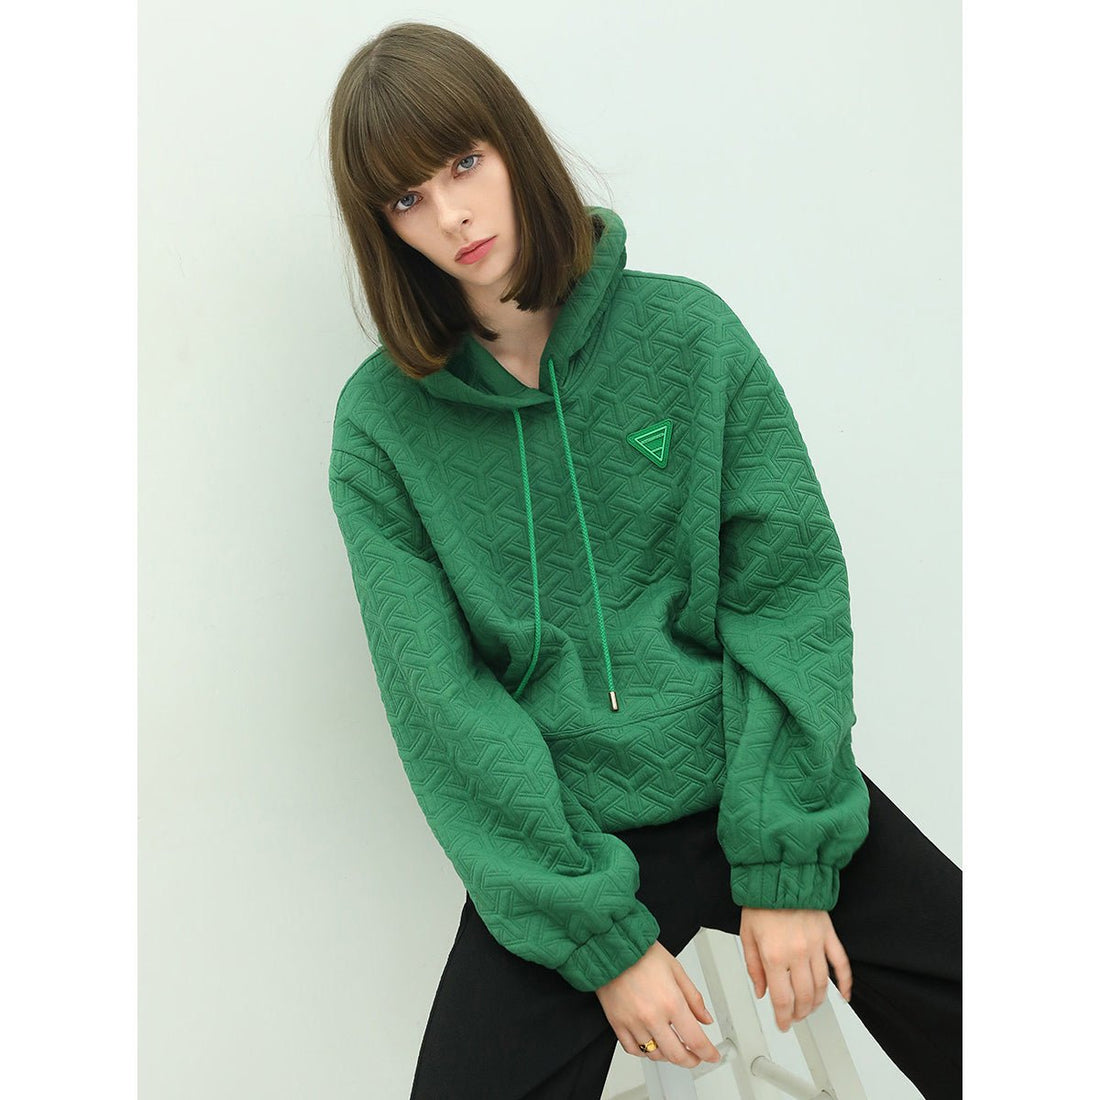 Geometry Jacquard Puff Sleeve Green Hooded Sweater - 0cm